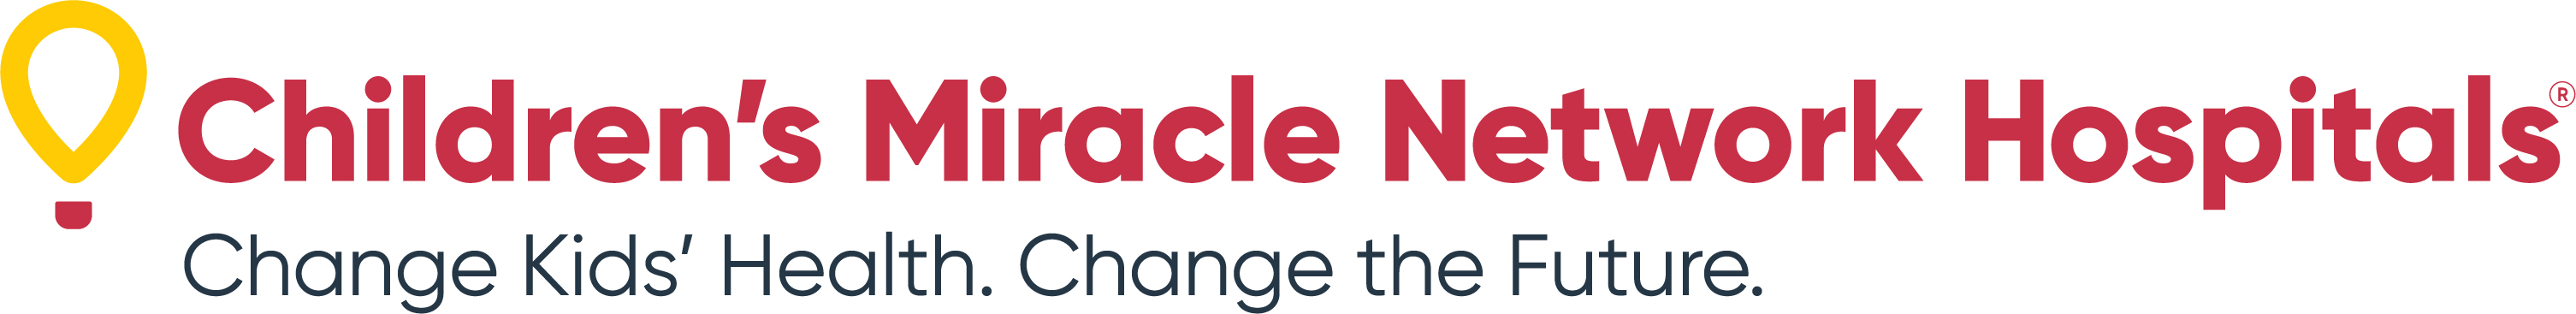 children's miracle network hospitals logo